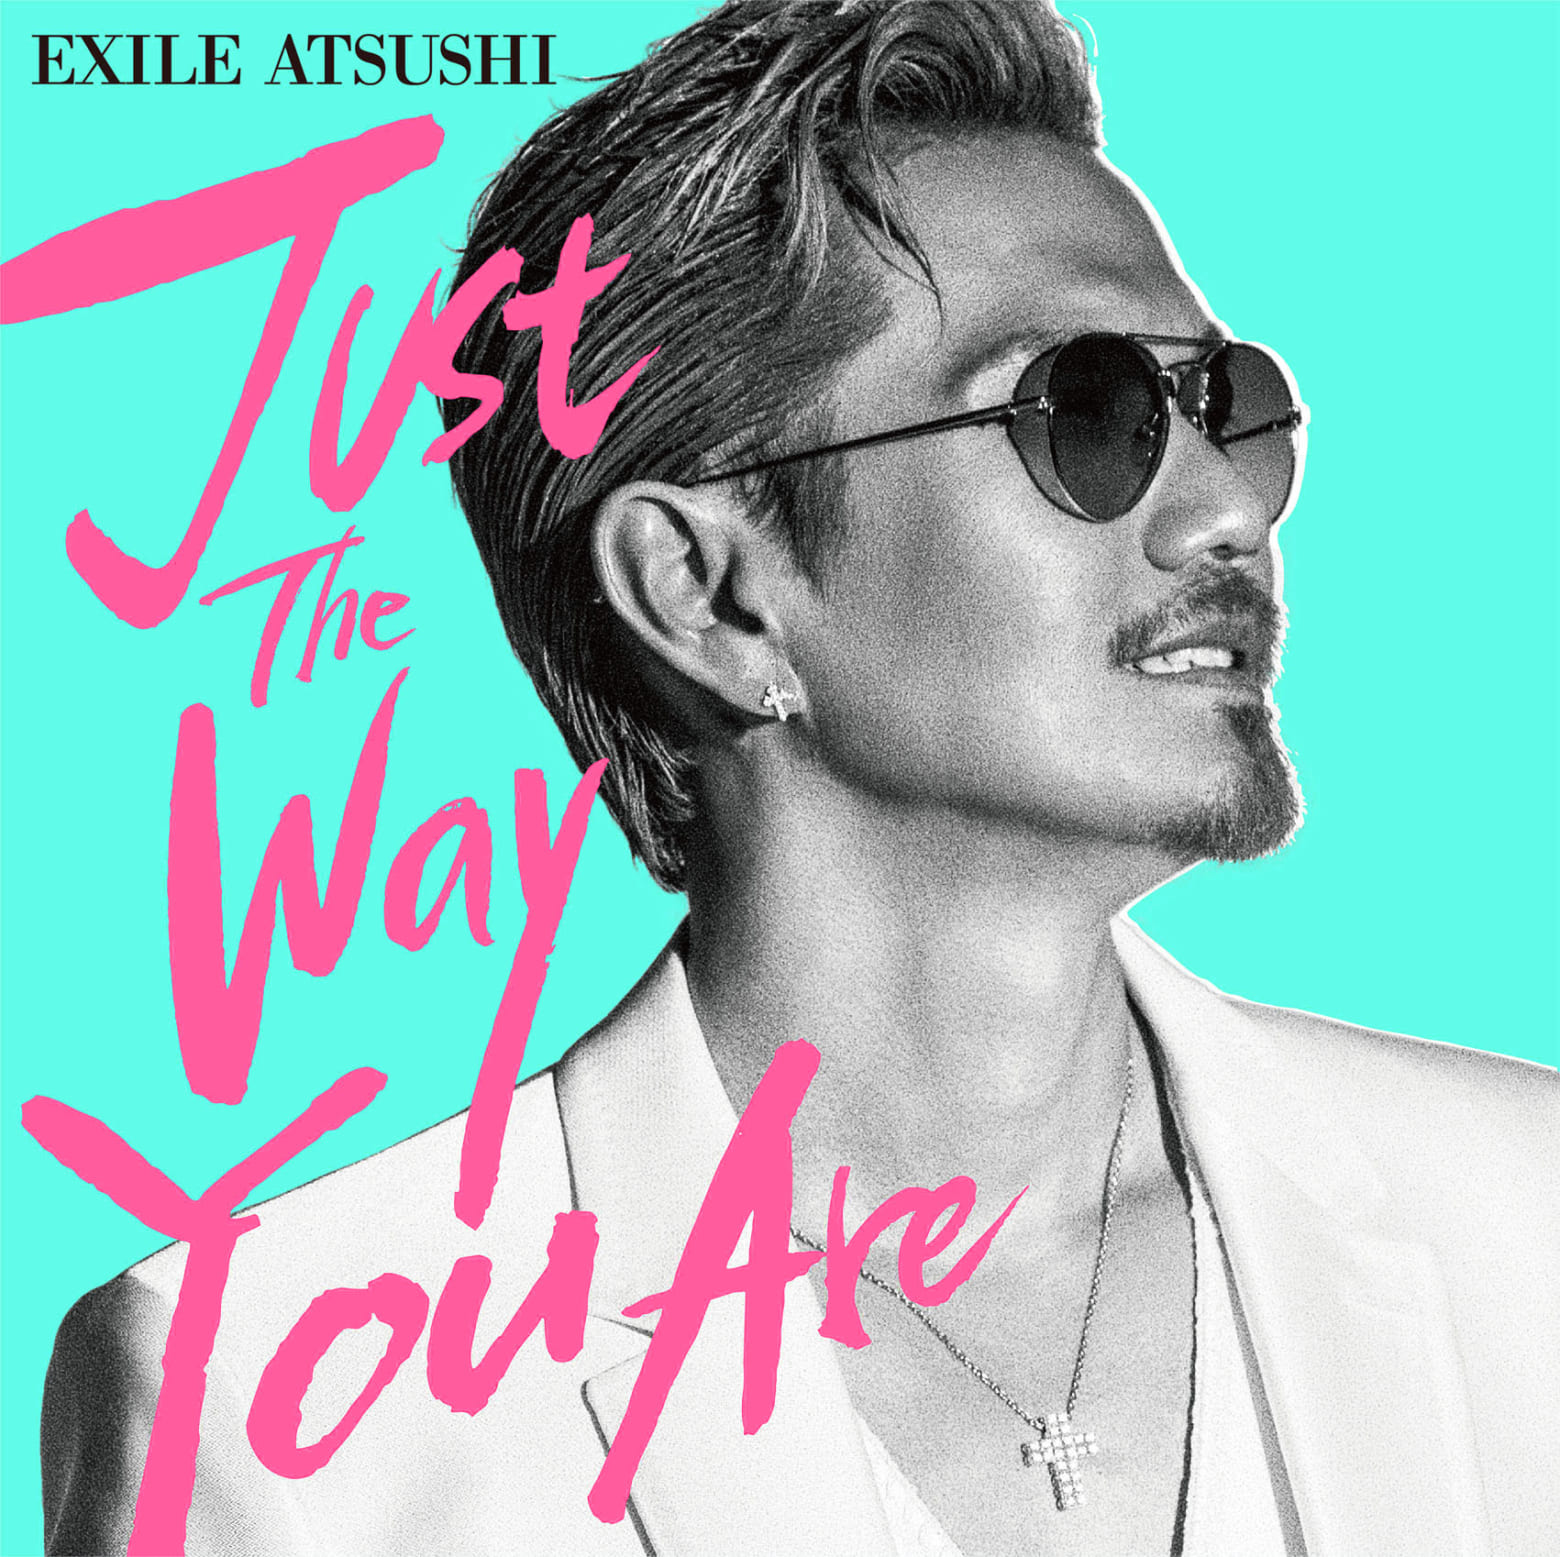 Exile Atsushiがブルーノ マーズと4ヶ月ぶりの再会 新作 Just The Way You Are をプレゼント Musicman